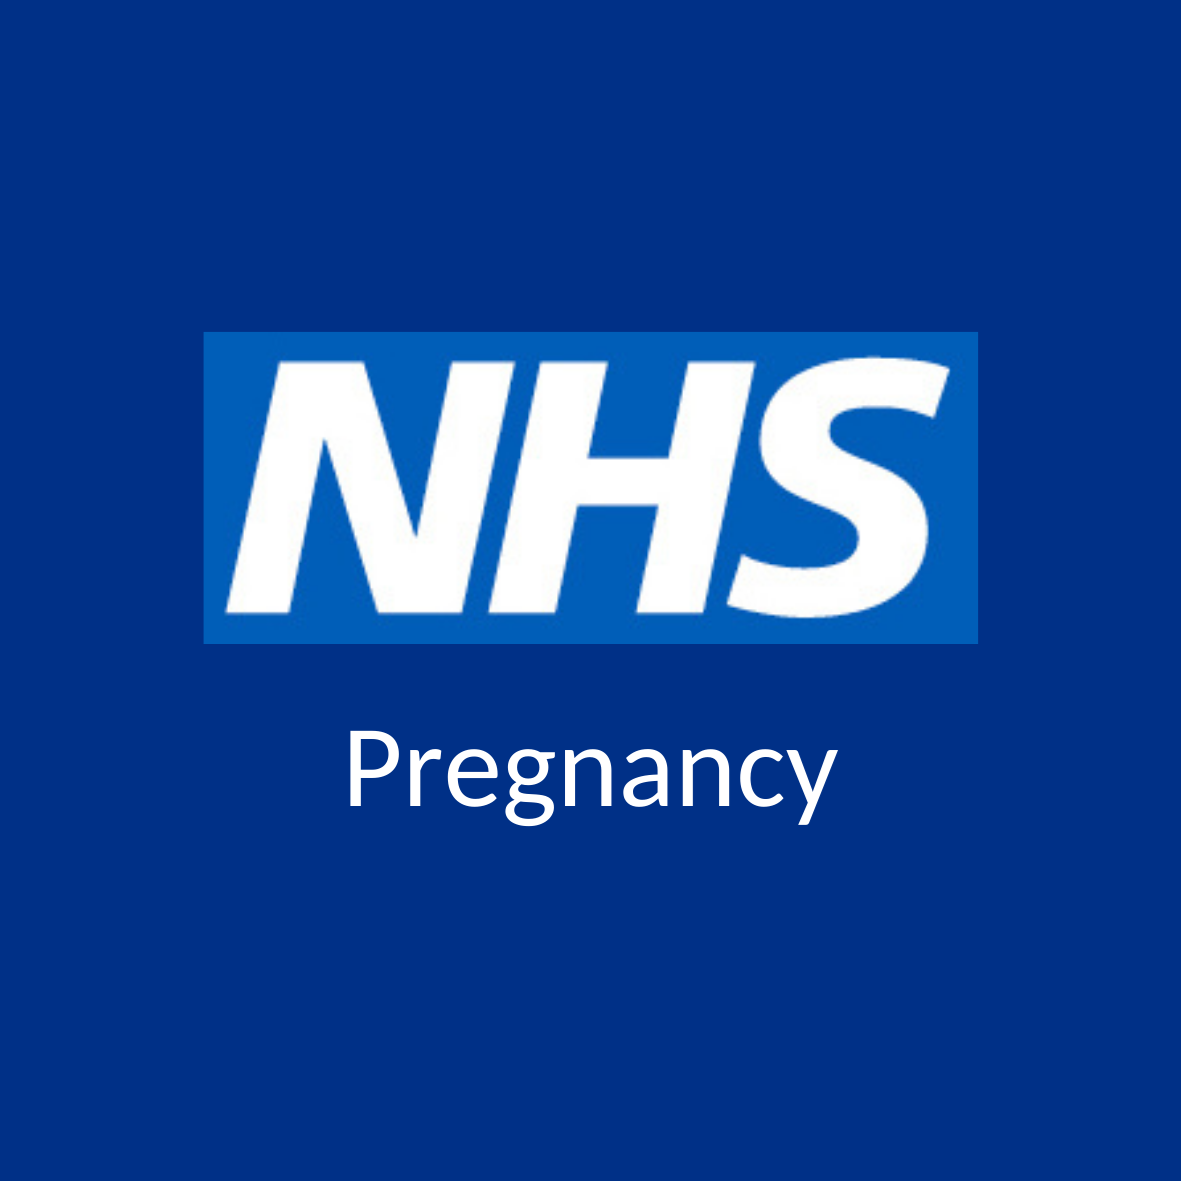 NHS Logo and Word 'Pregnancy'